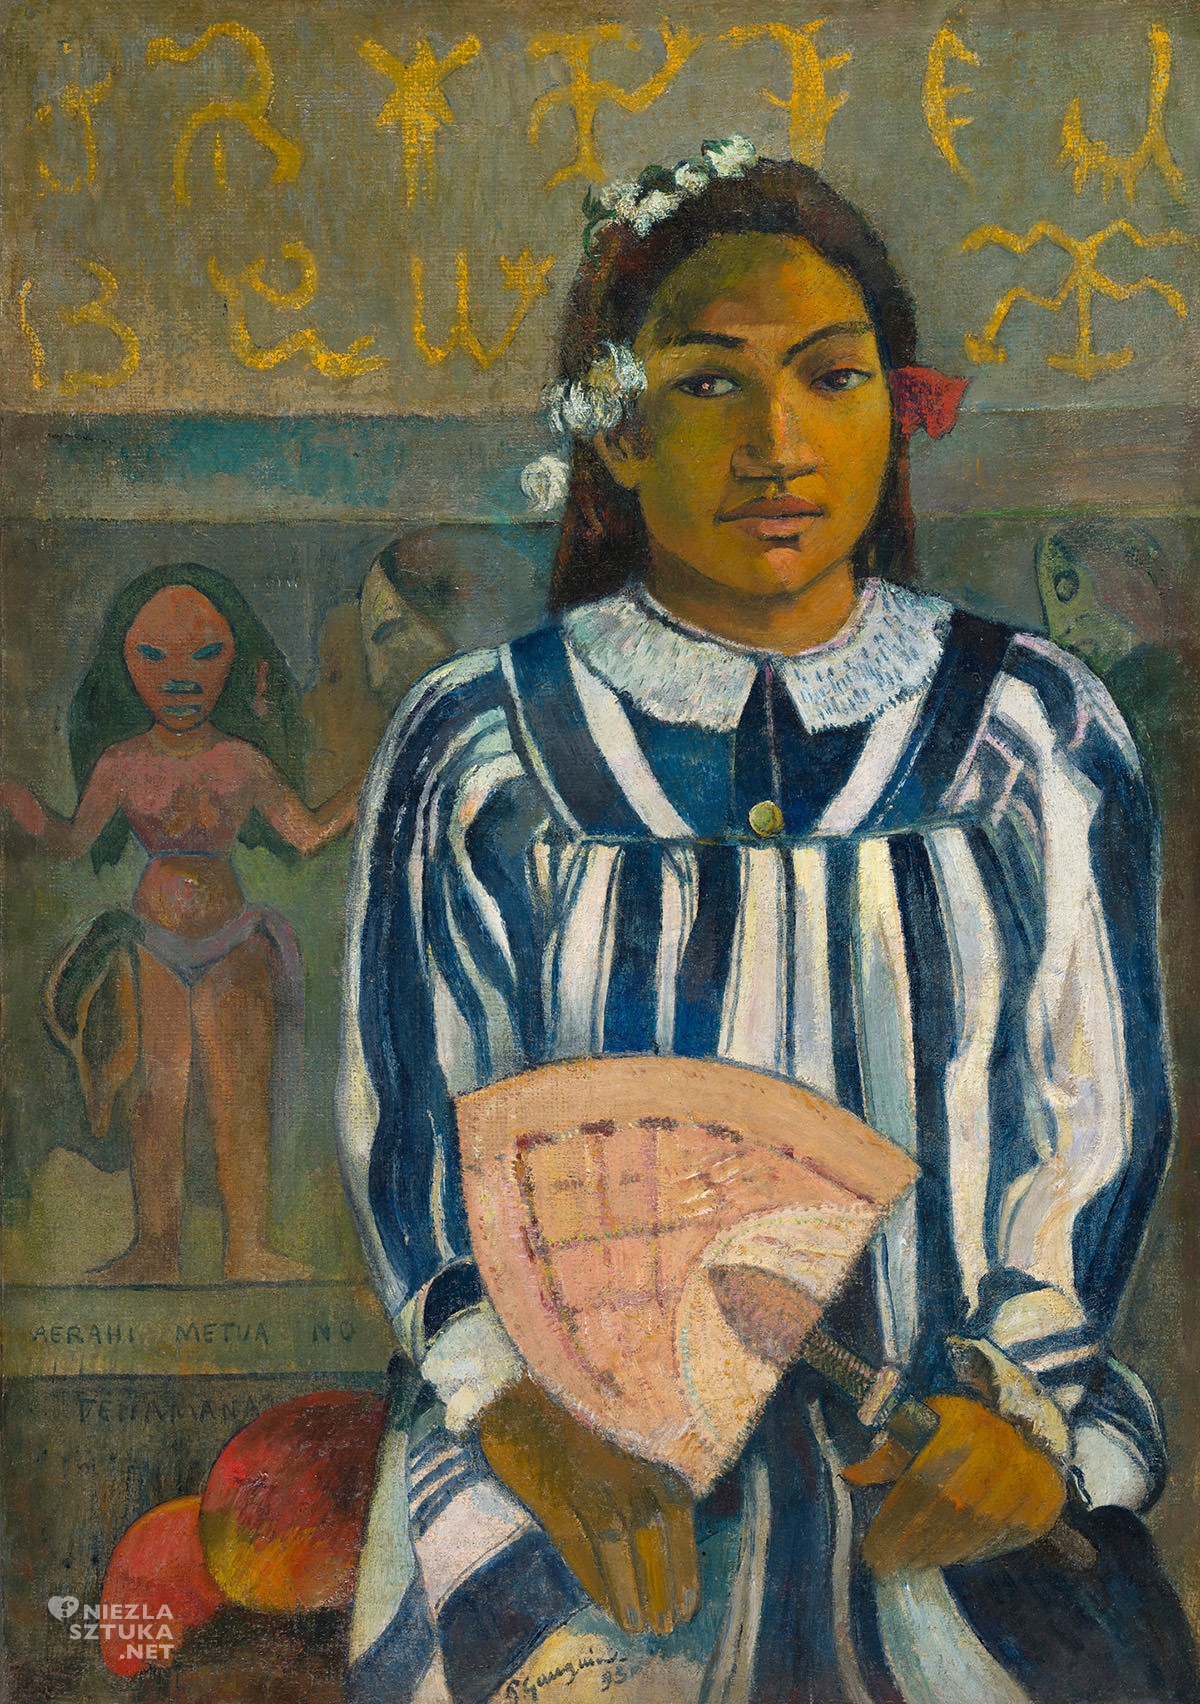 Paul Gauguin, Merahi metua no Tehamana, Tehamana ma wielu rodziców, Tahiti, Niezła Sztuka